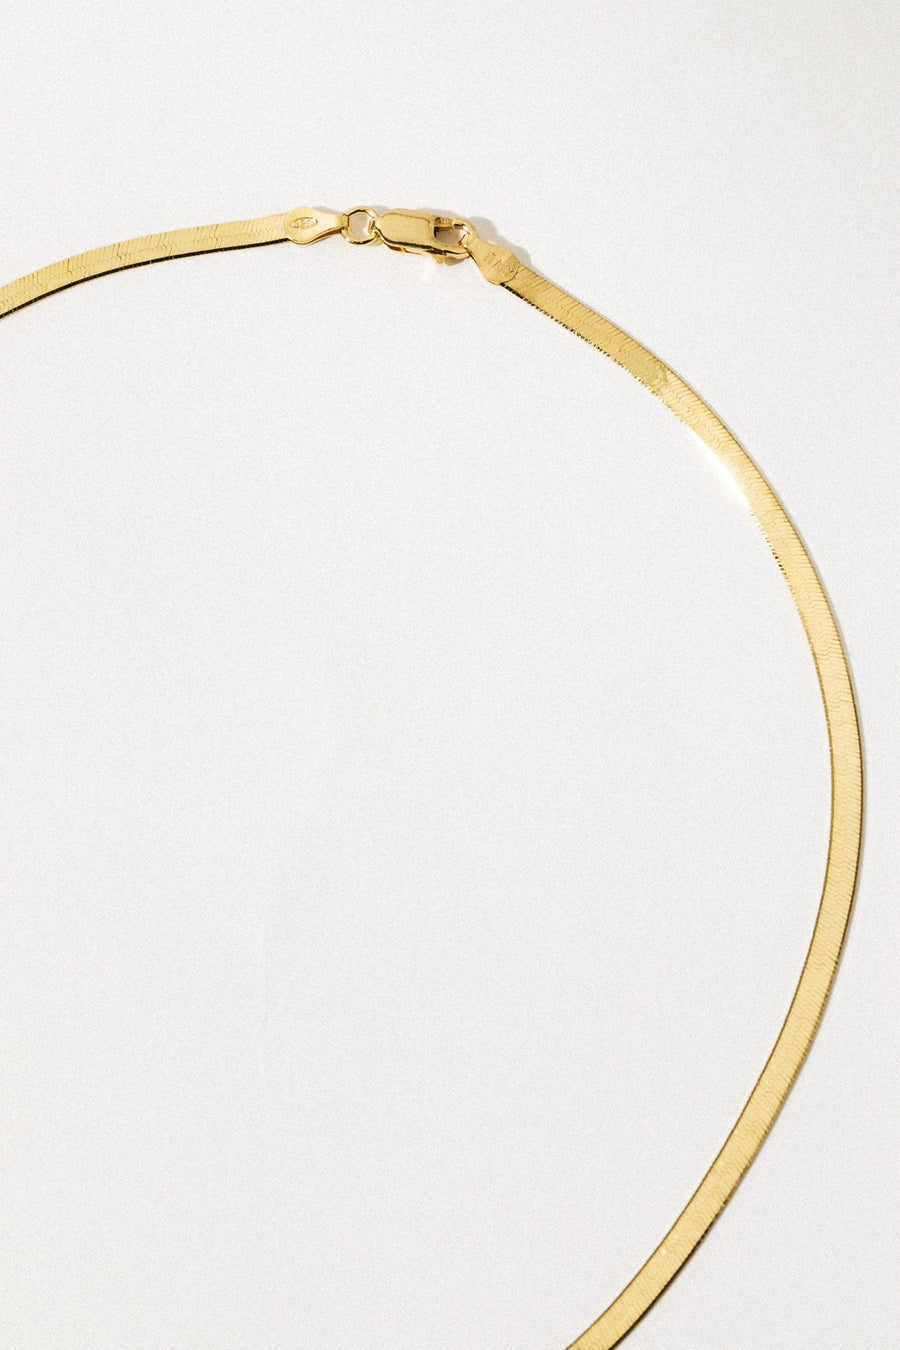 Tresor Jewelry Gold / 16 Inches Topanga Canyon Necklace